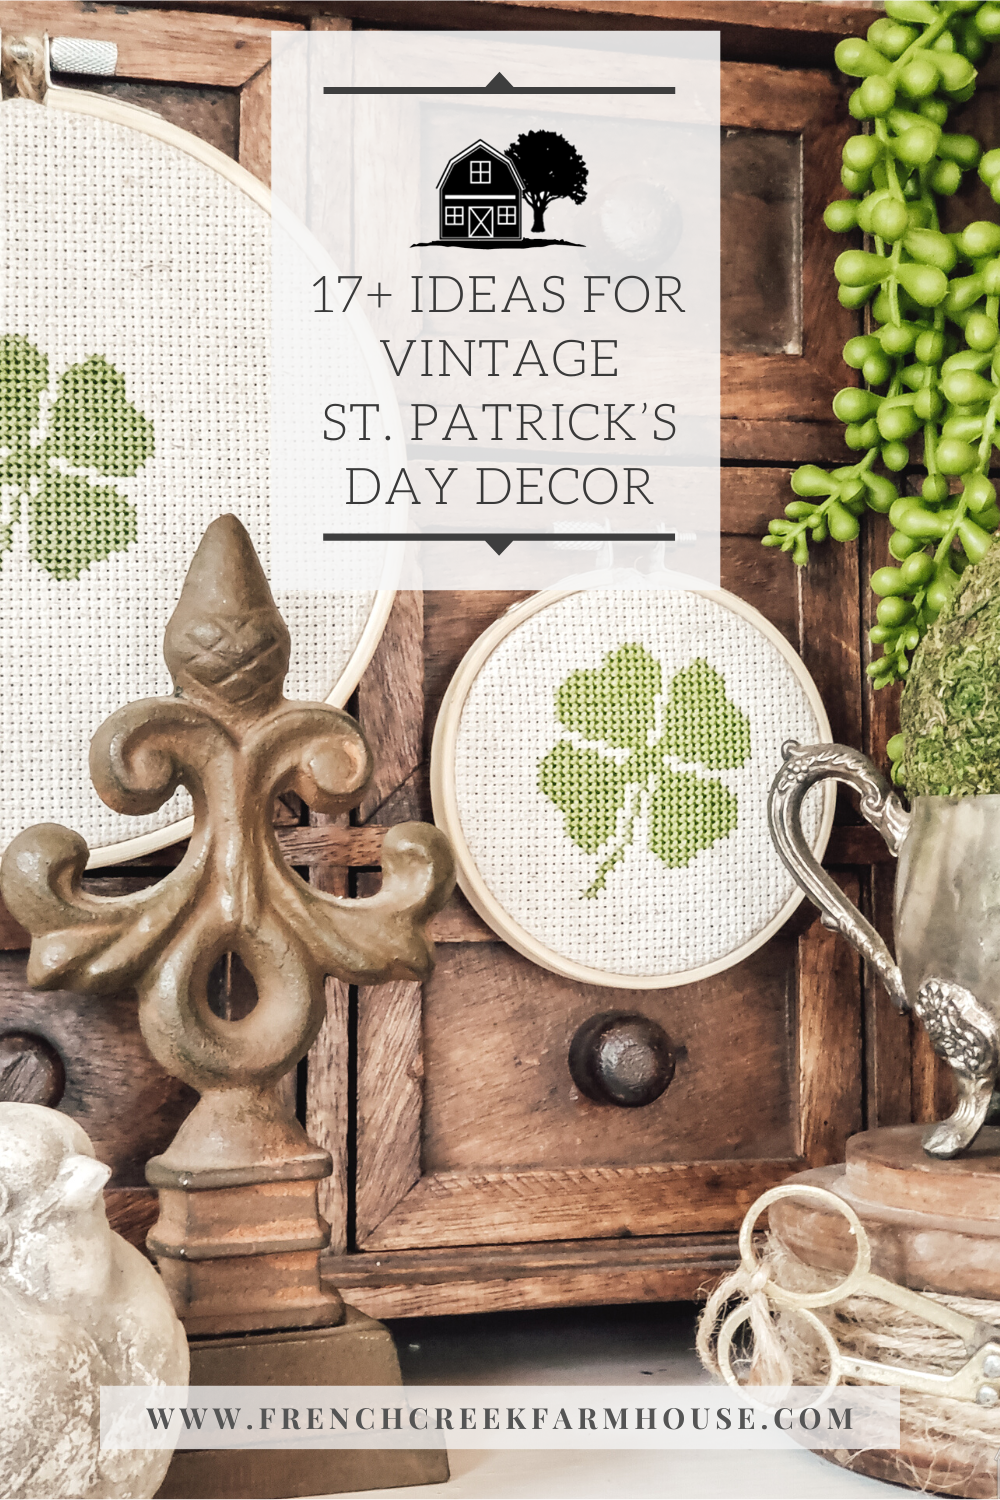 17 Ideas for Vintage St. Patrick's Day Decor